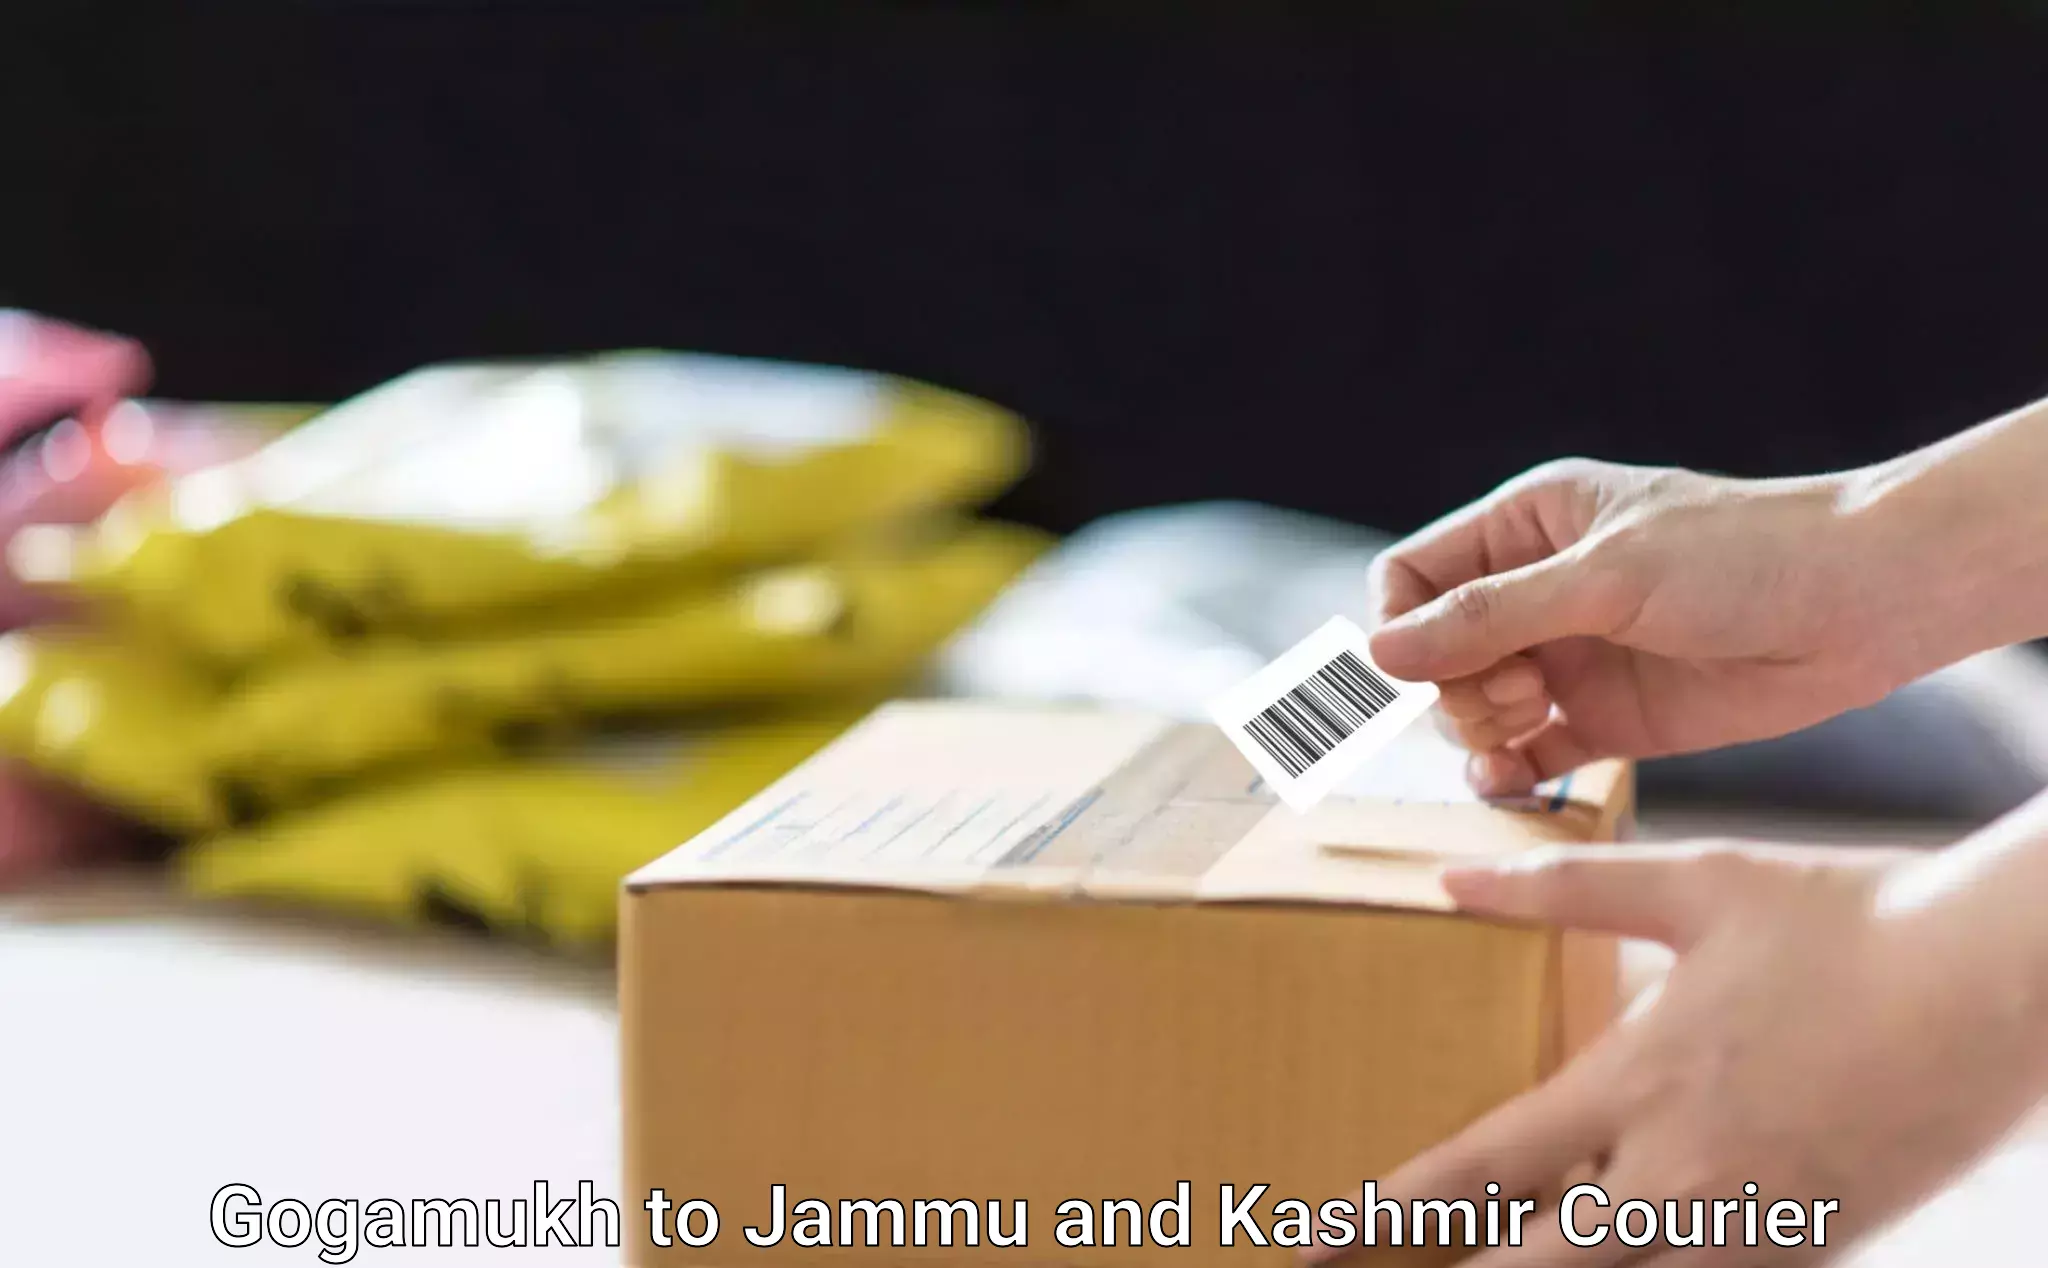 24/7 courier service Gogamukh to Srinagar Kashmir